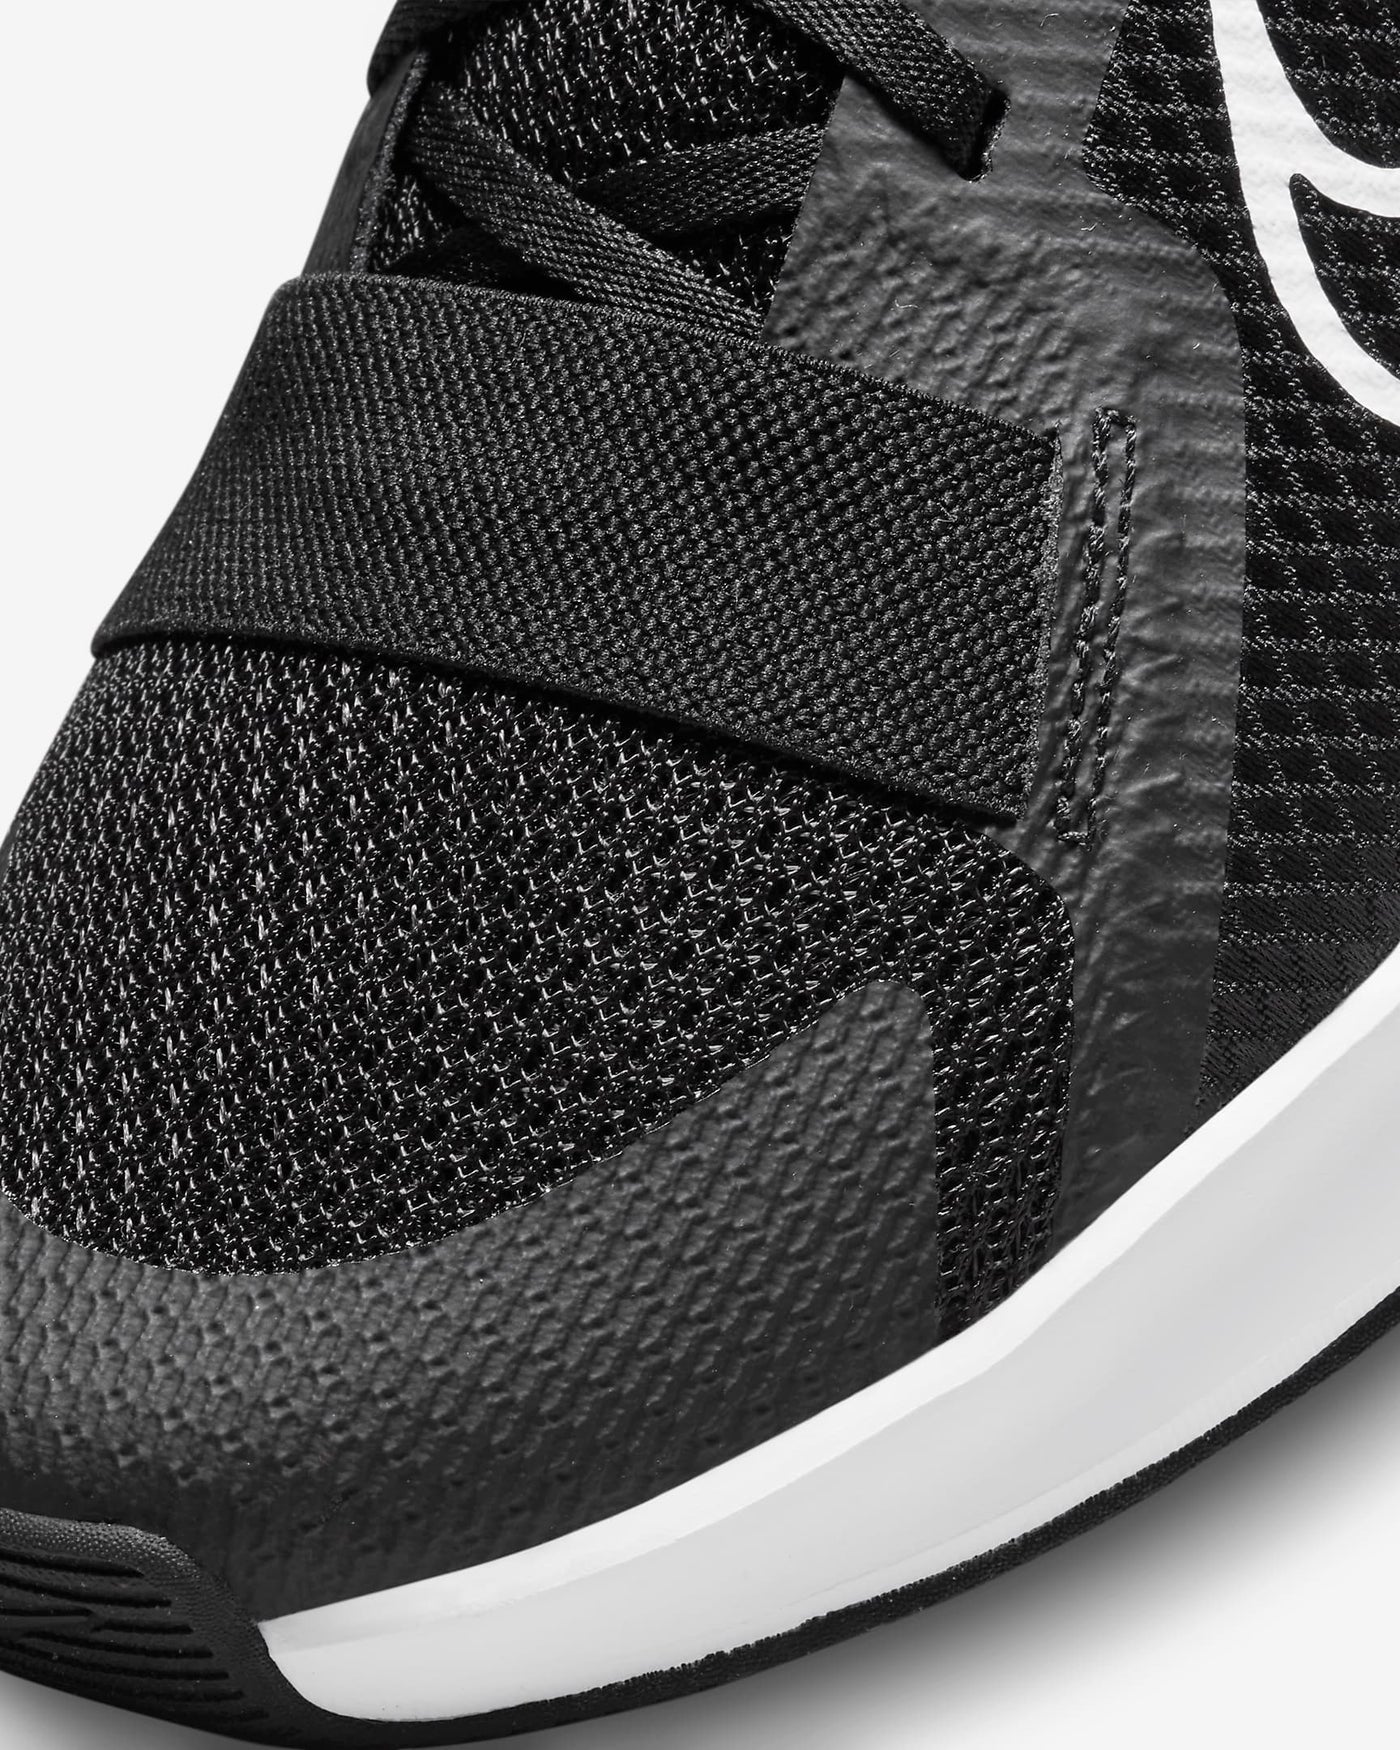 Nike 0823 - 003 MC Trainers - Black White